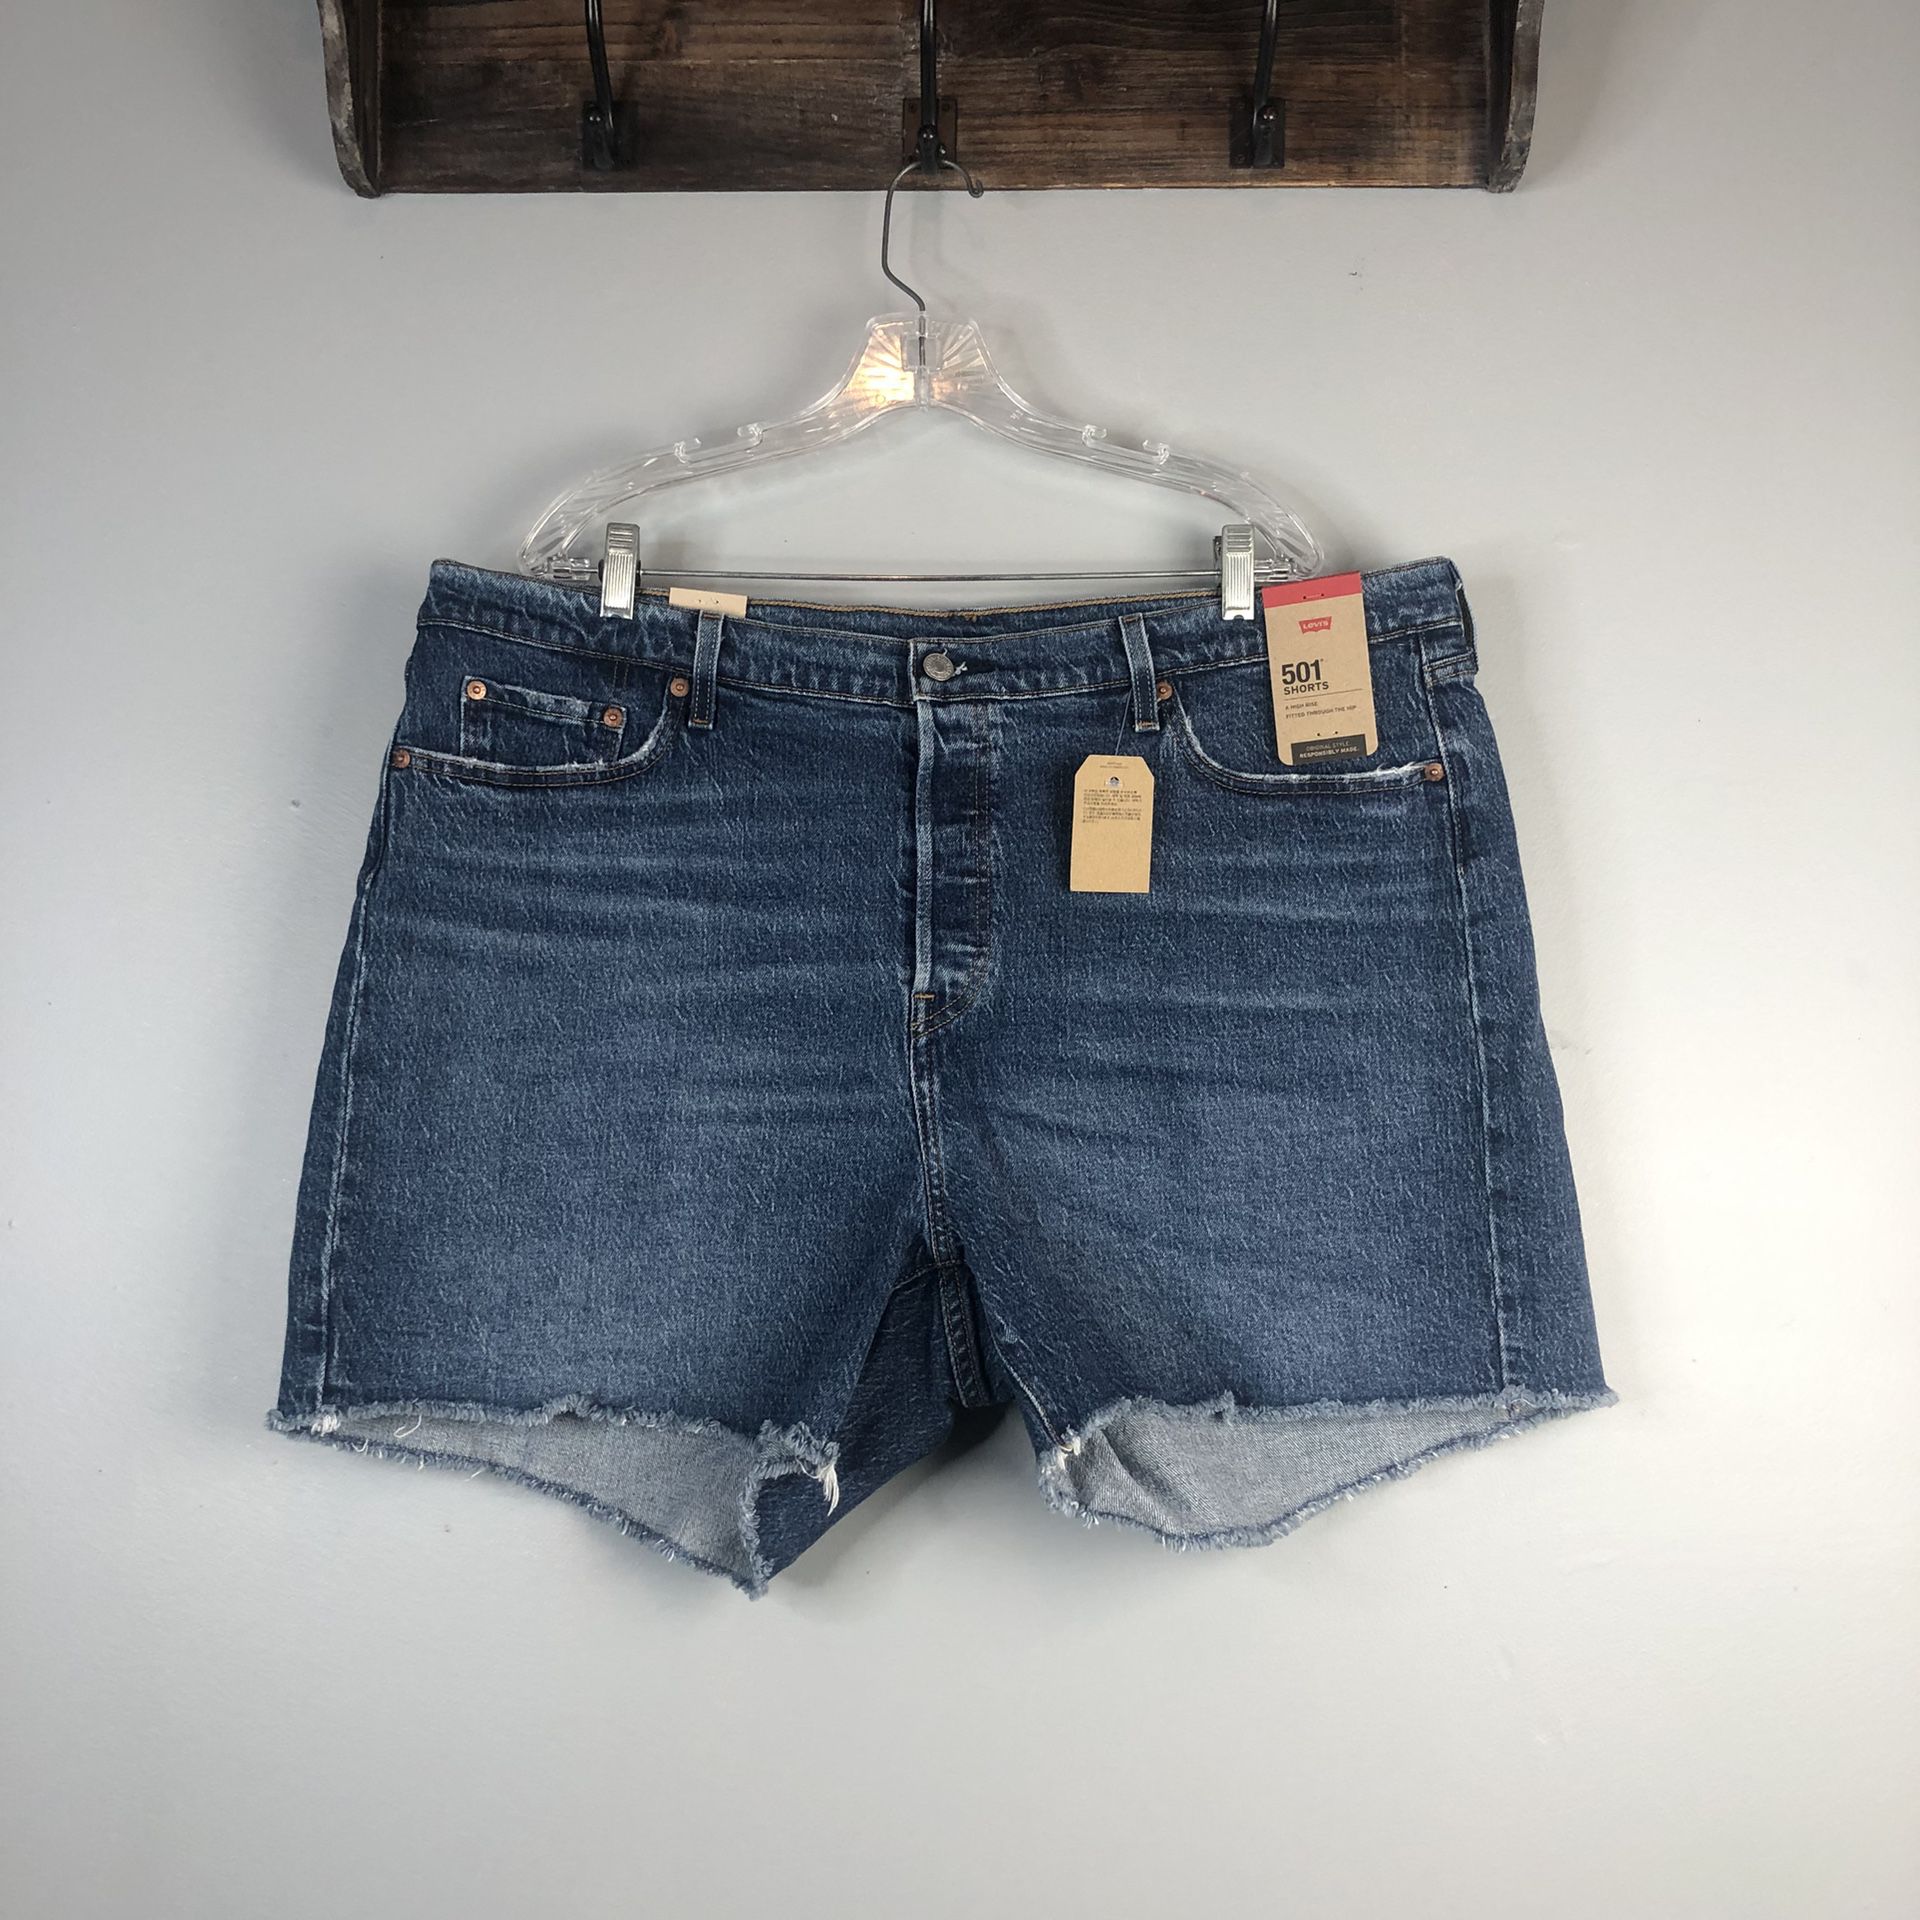 NWT Levi's 501 Jean shorts plus Size 20W for Sale in Smyrna, DE - OfferUp